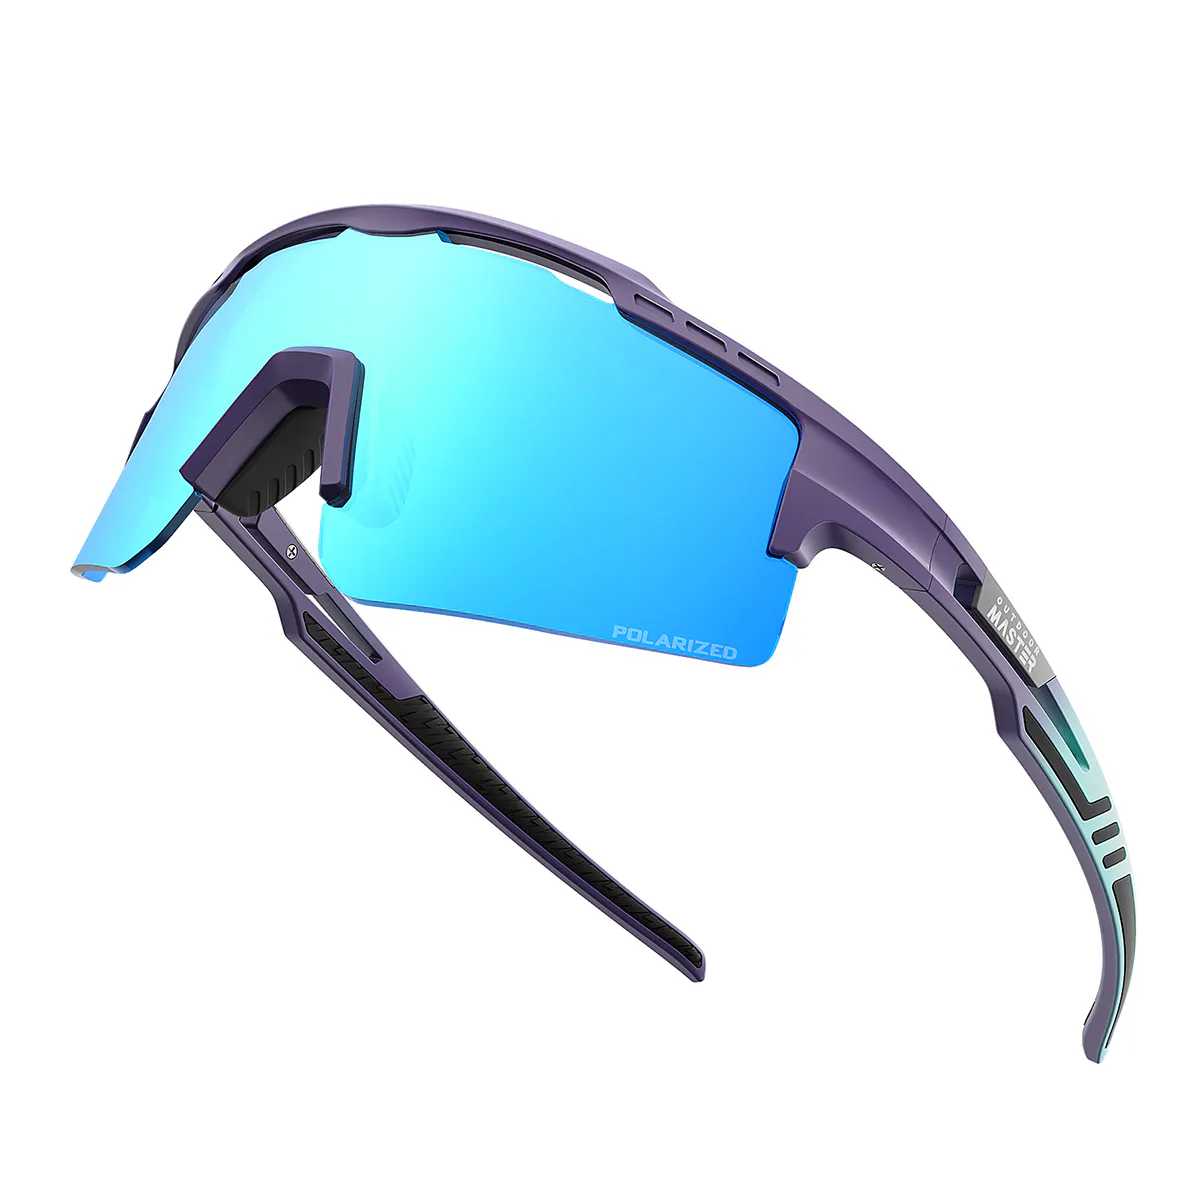 Hawk II Polarized Sports Sunglasses